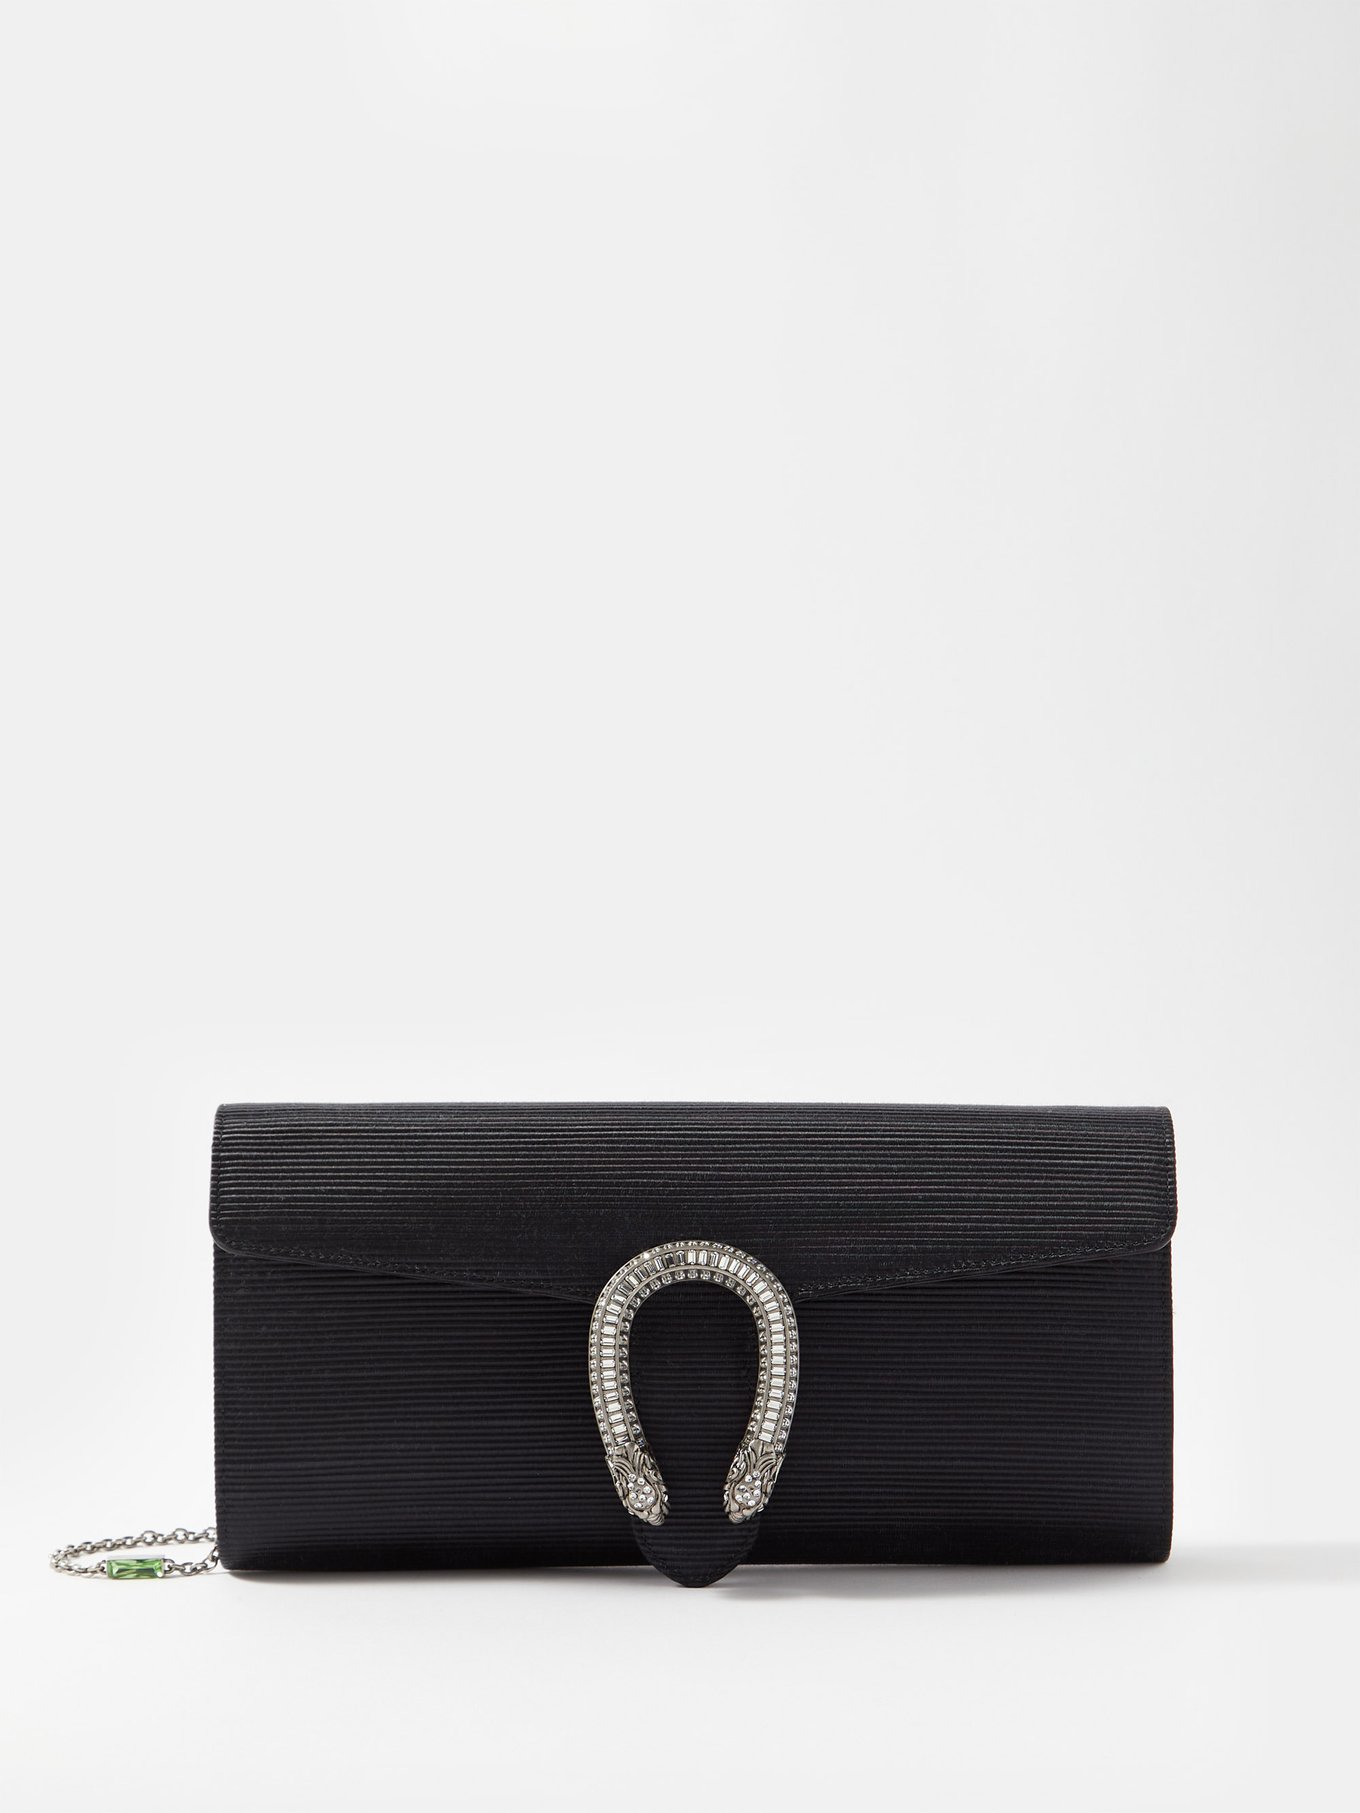 Black velvet designer clutch bag, luxury evening clutch